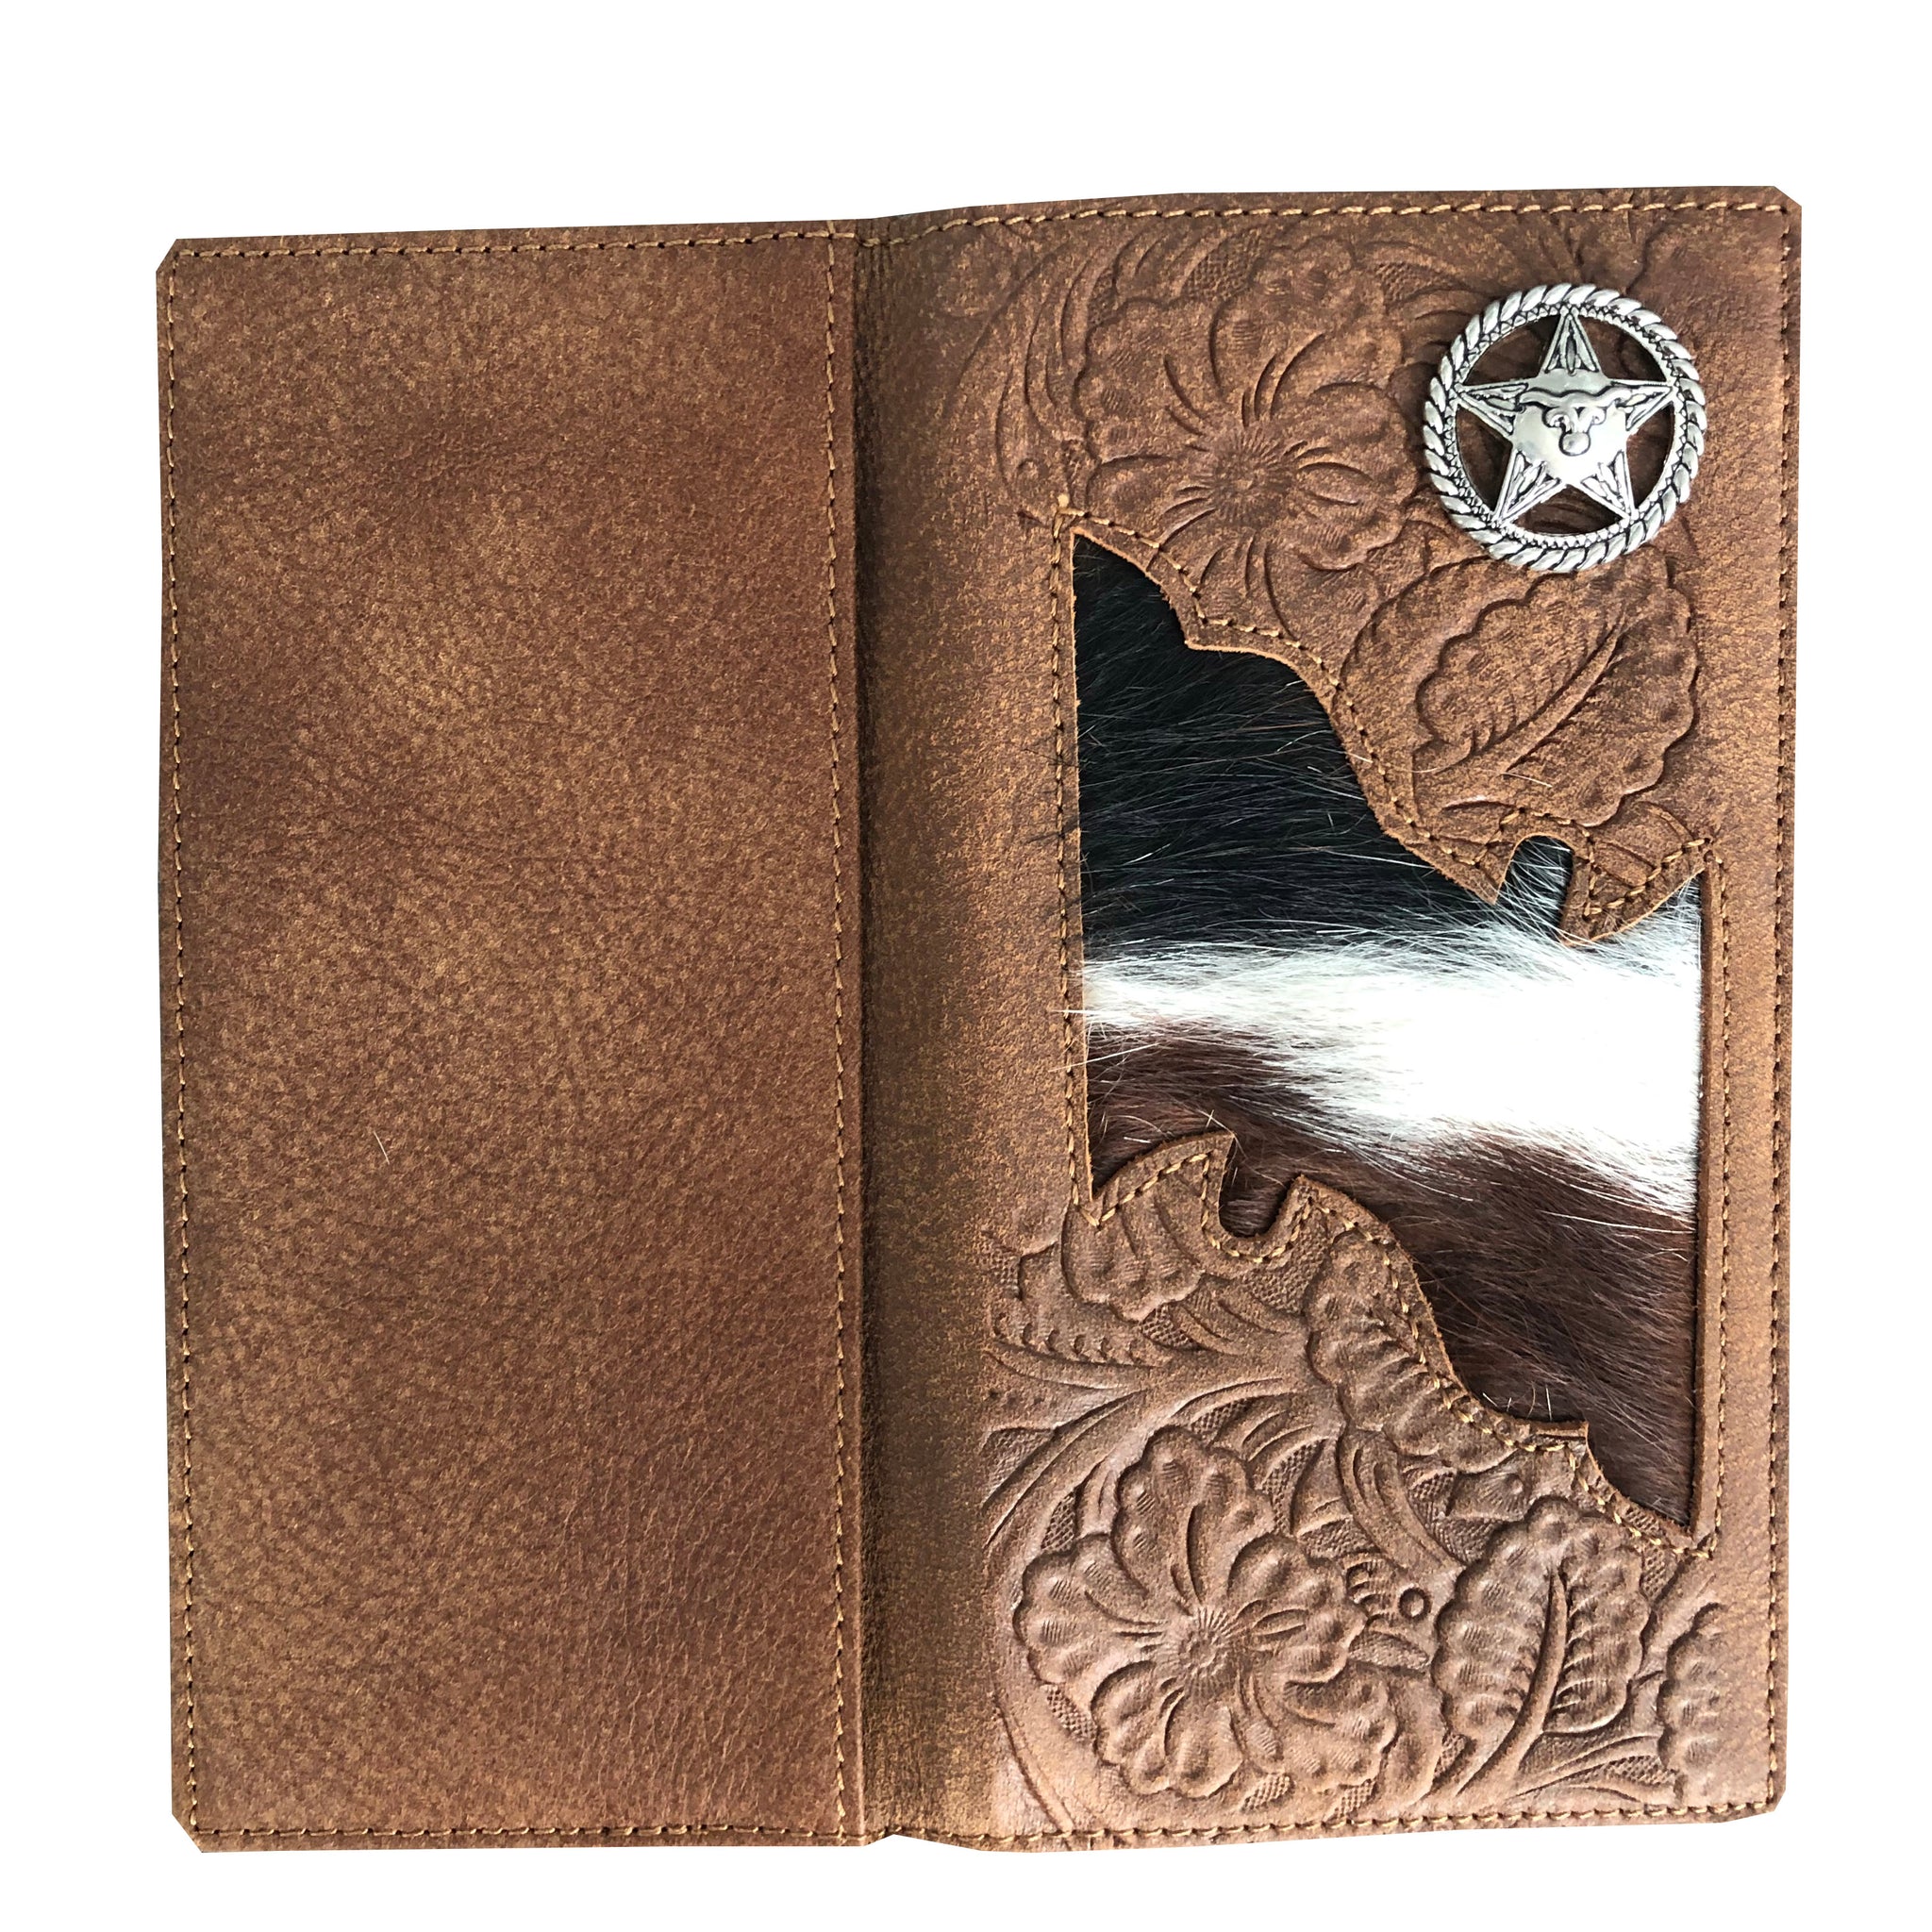 Janhooya Western Cowboy Wallet Star Concho Genuine Leather Long Bifold